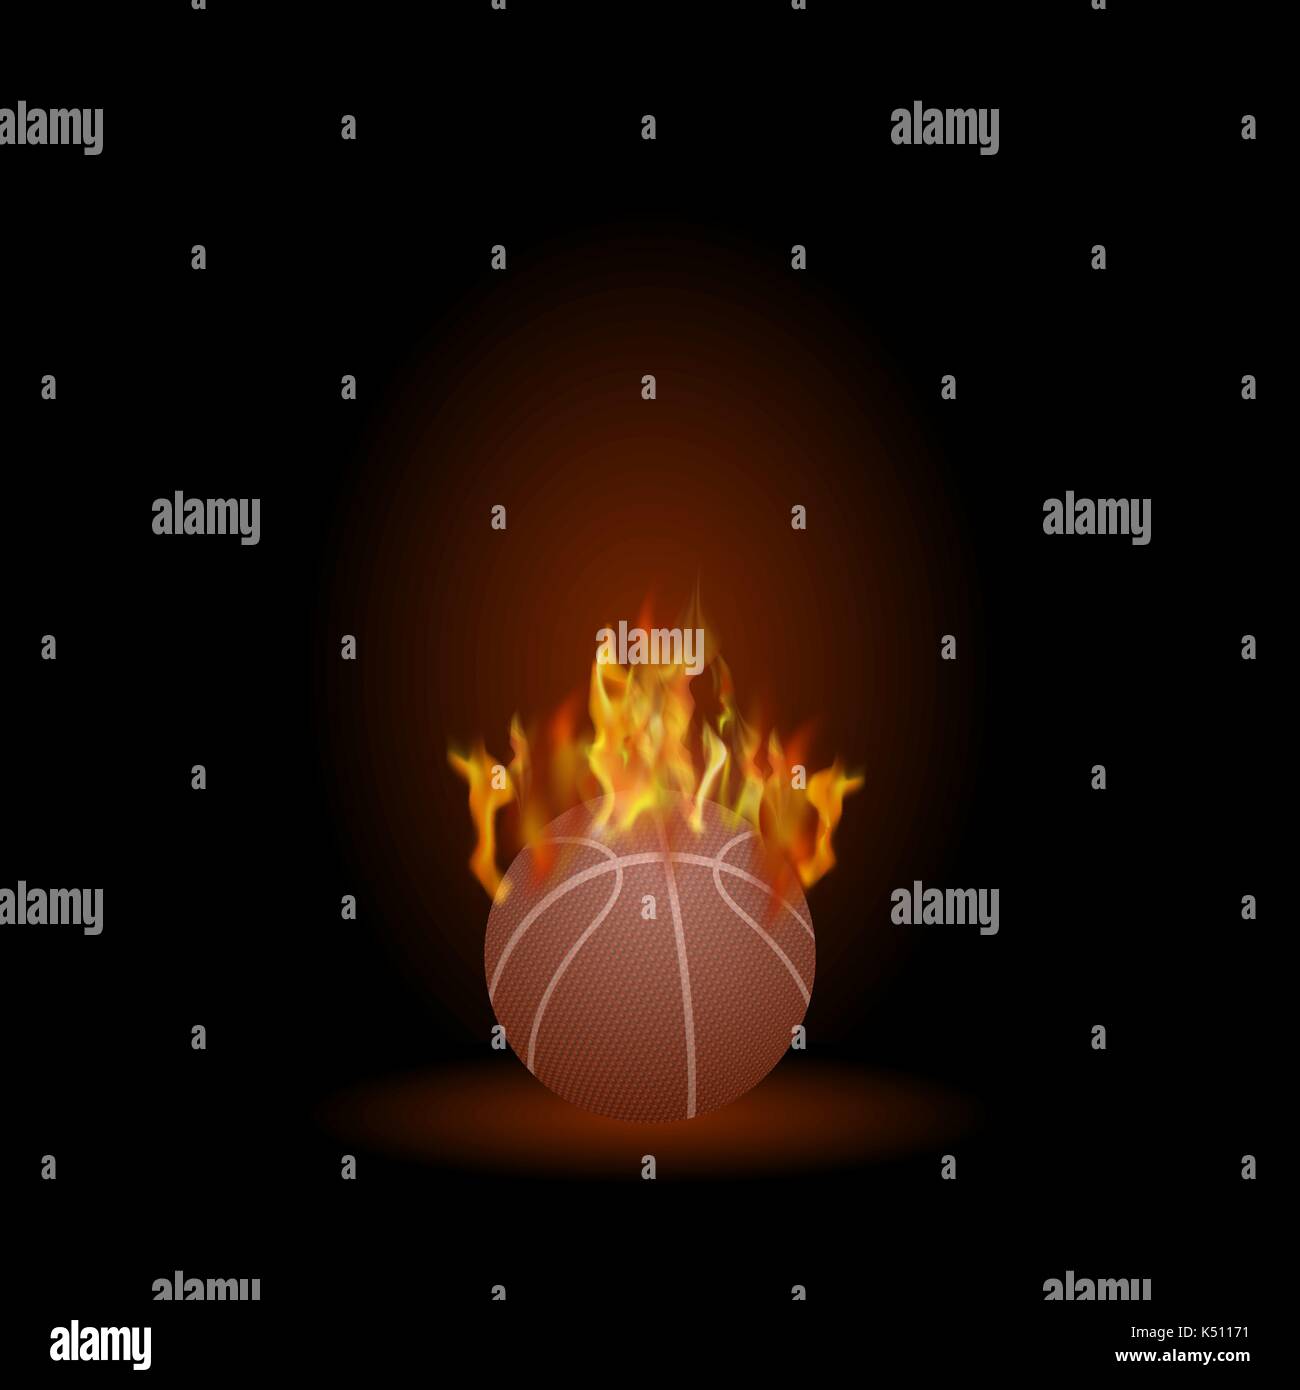 Burning Basketball Orange Ball Icon Stock Vector